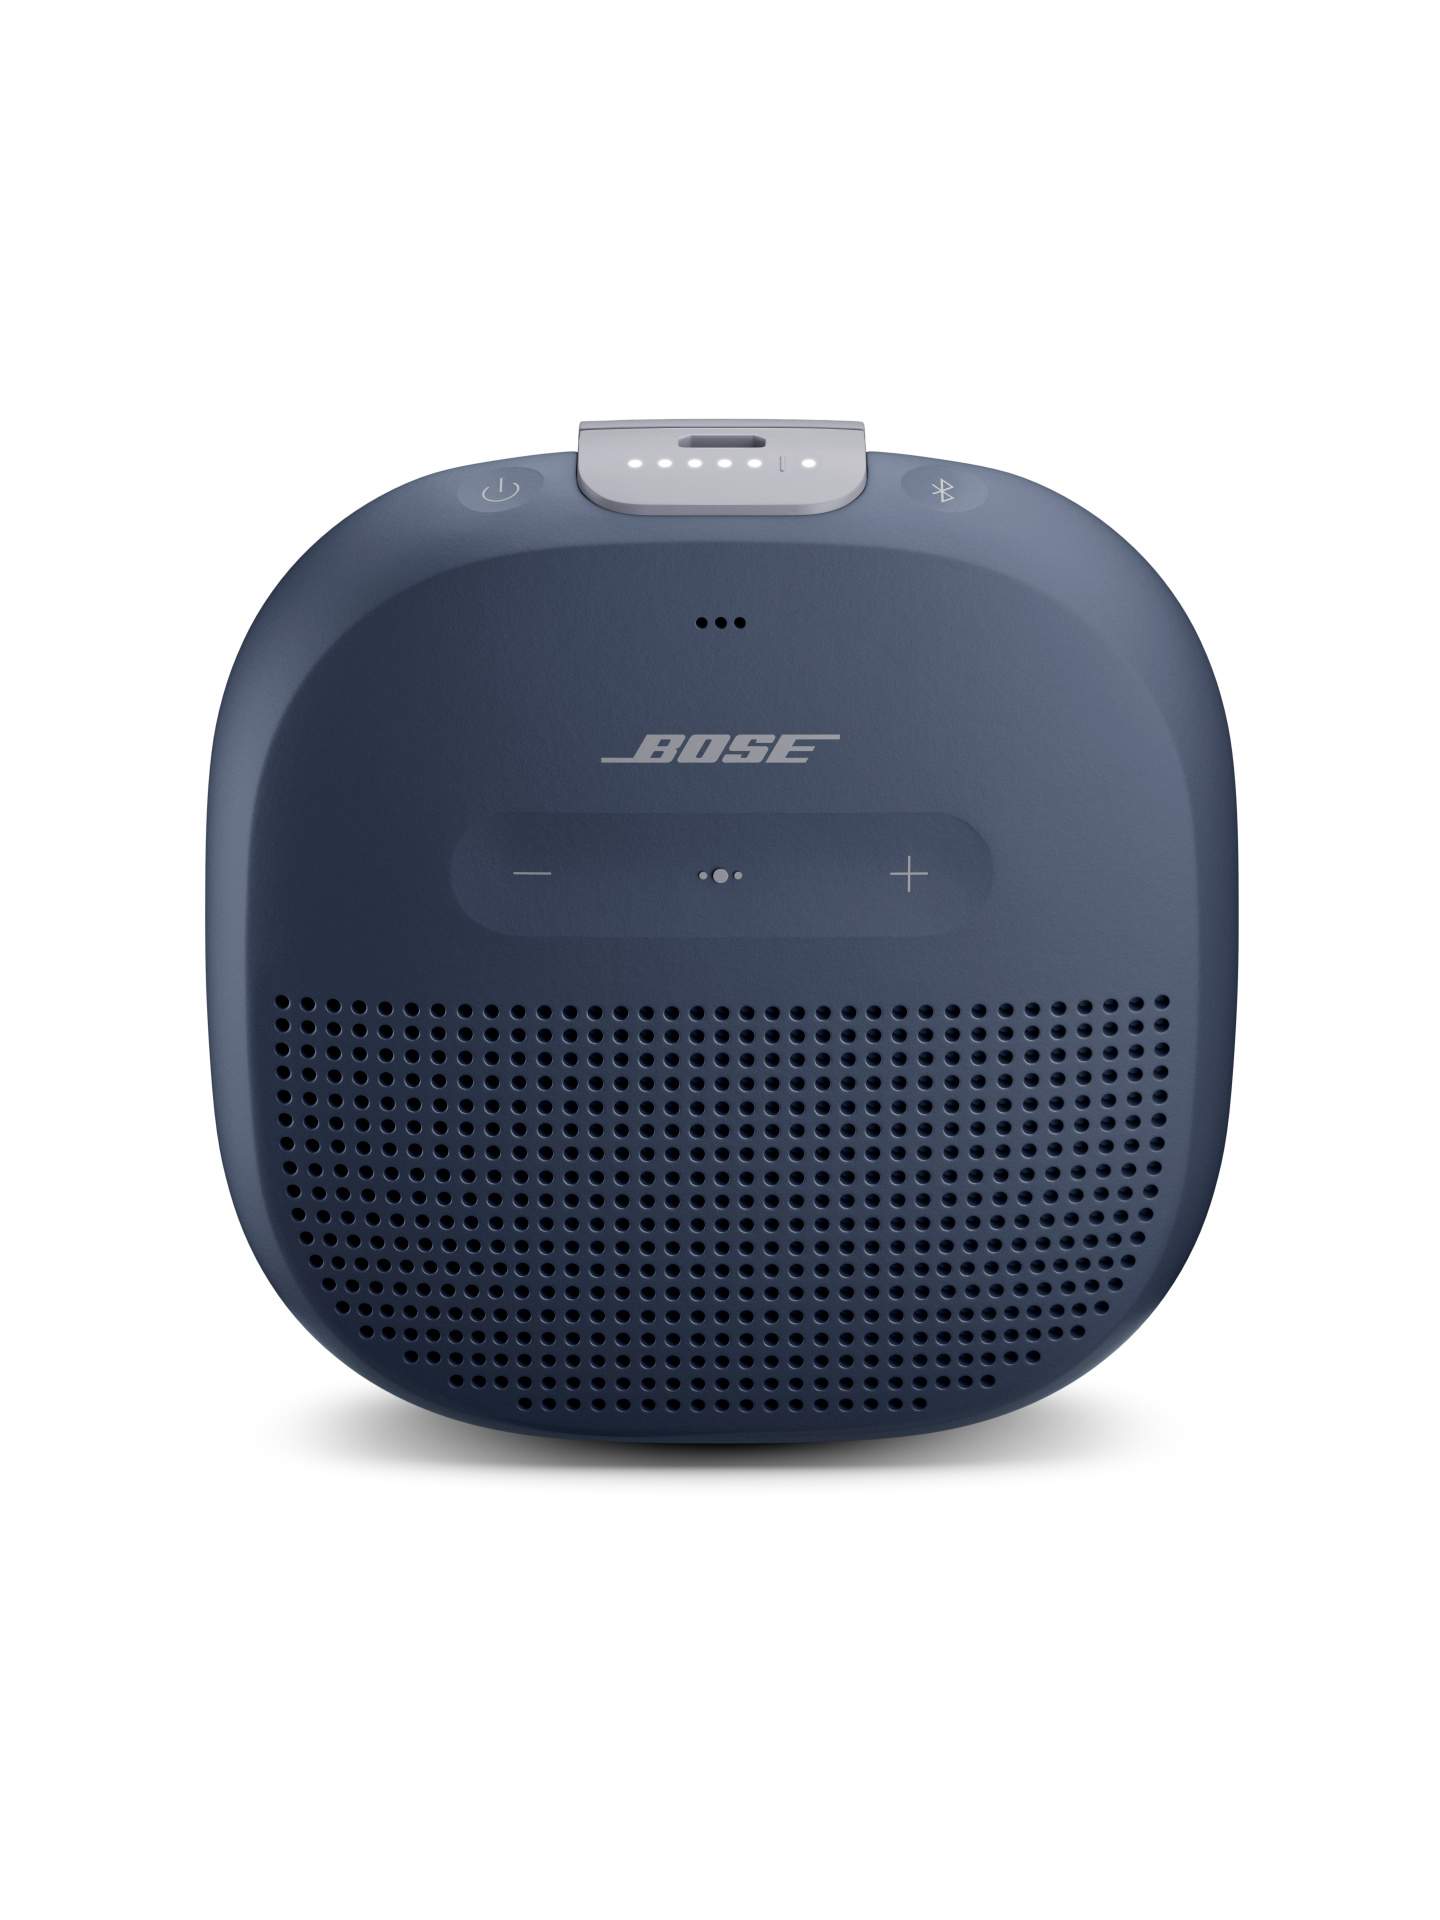 Bose SoundLink Micro Waterproof Wireless Portable Bluetooth Speaker, Blue - image 1 of 6